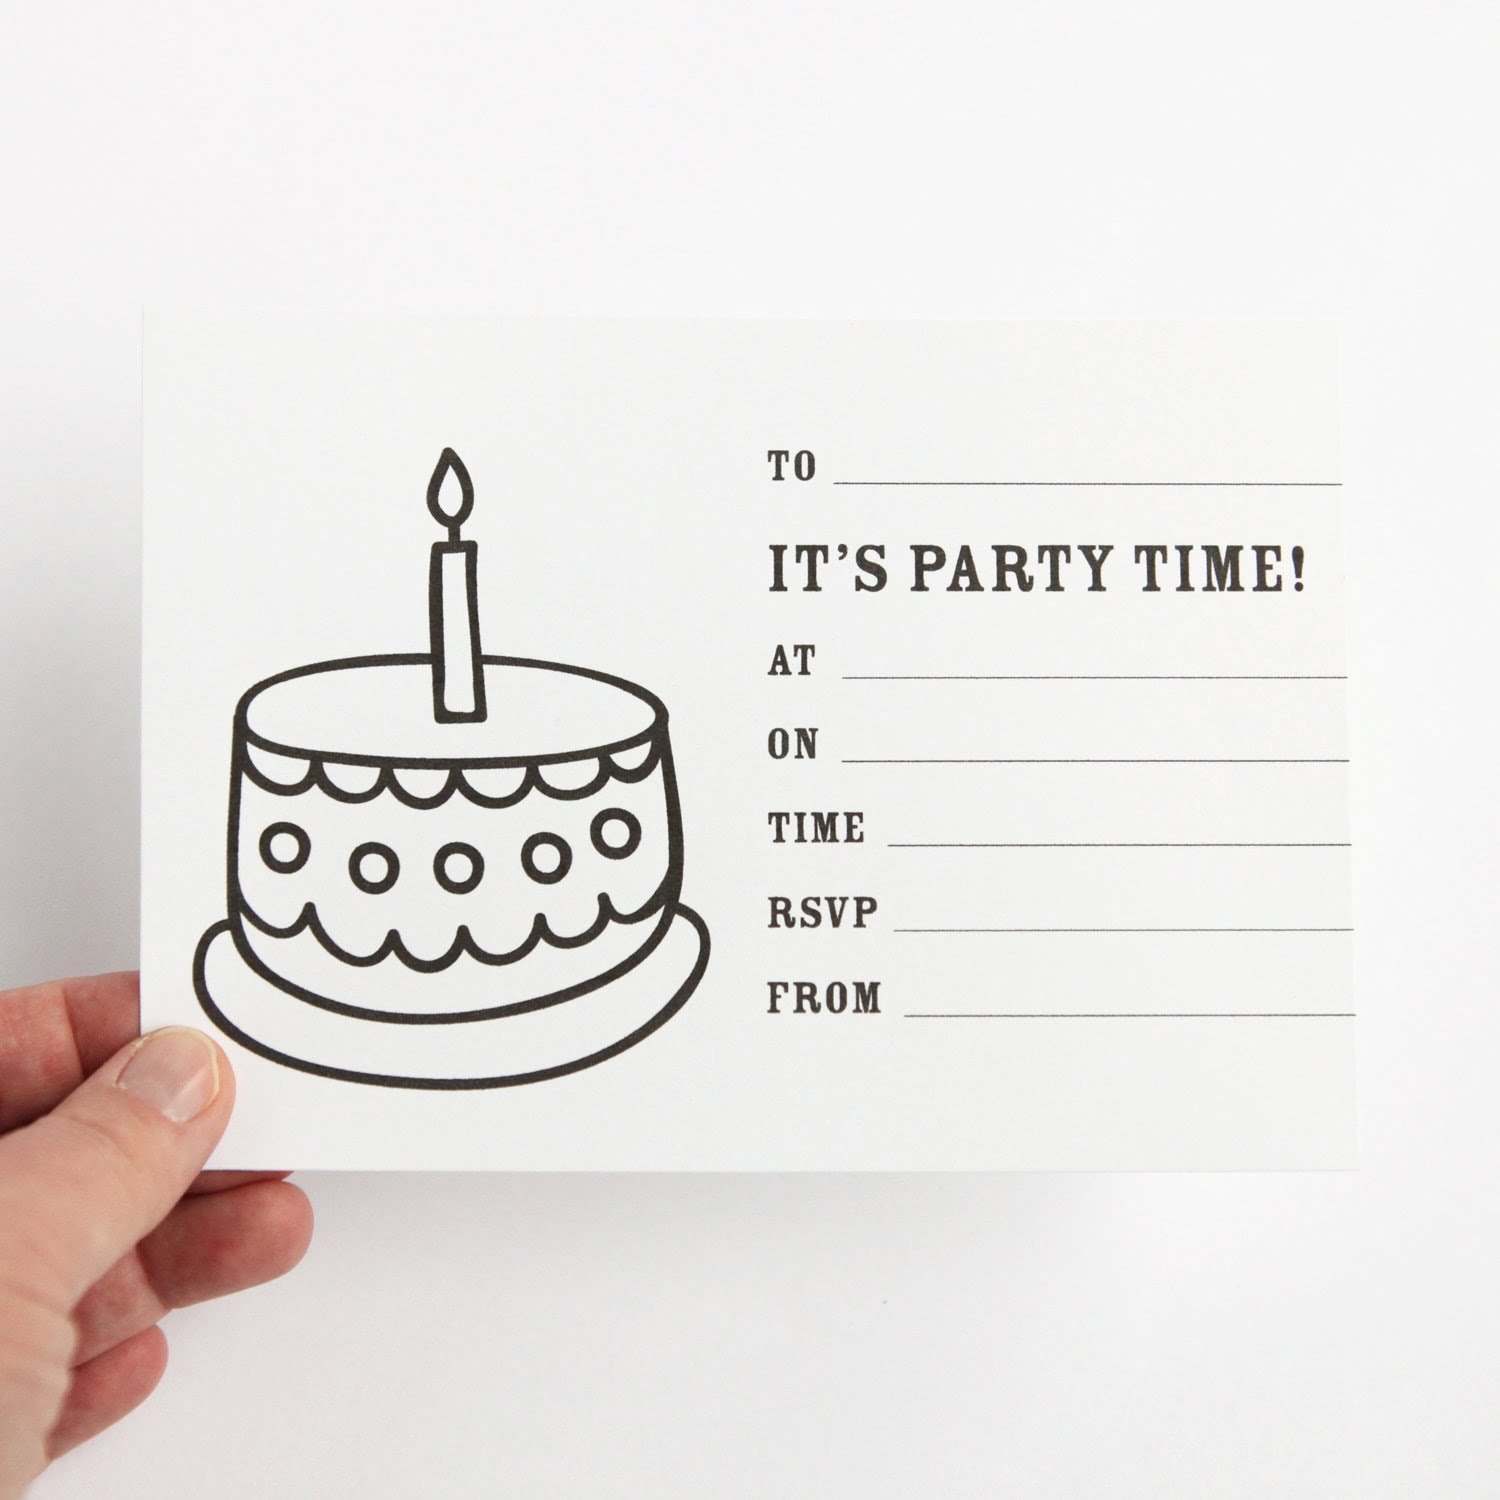 Printable Birthday Invitation Cards